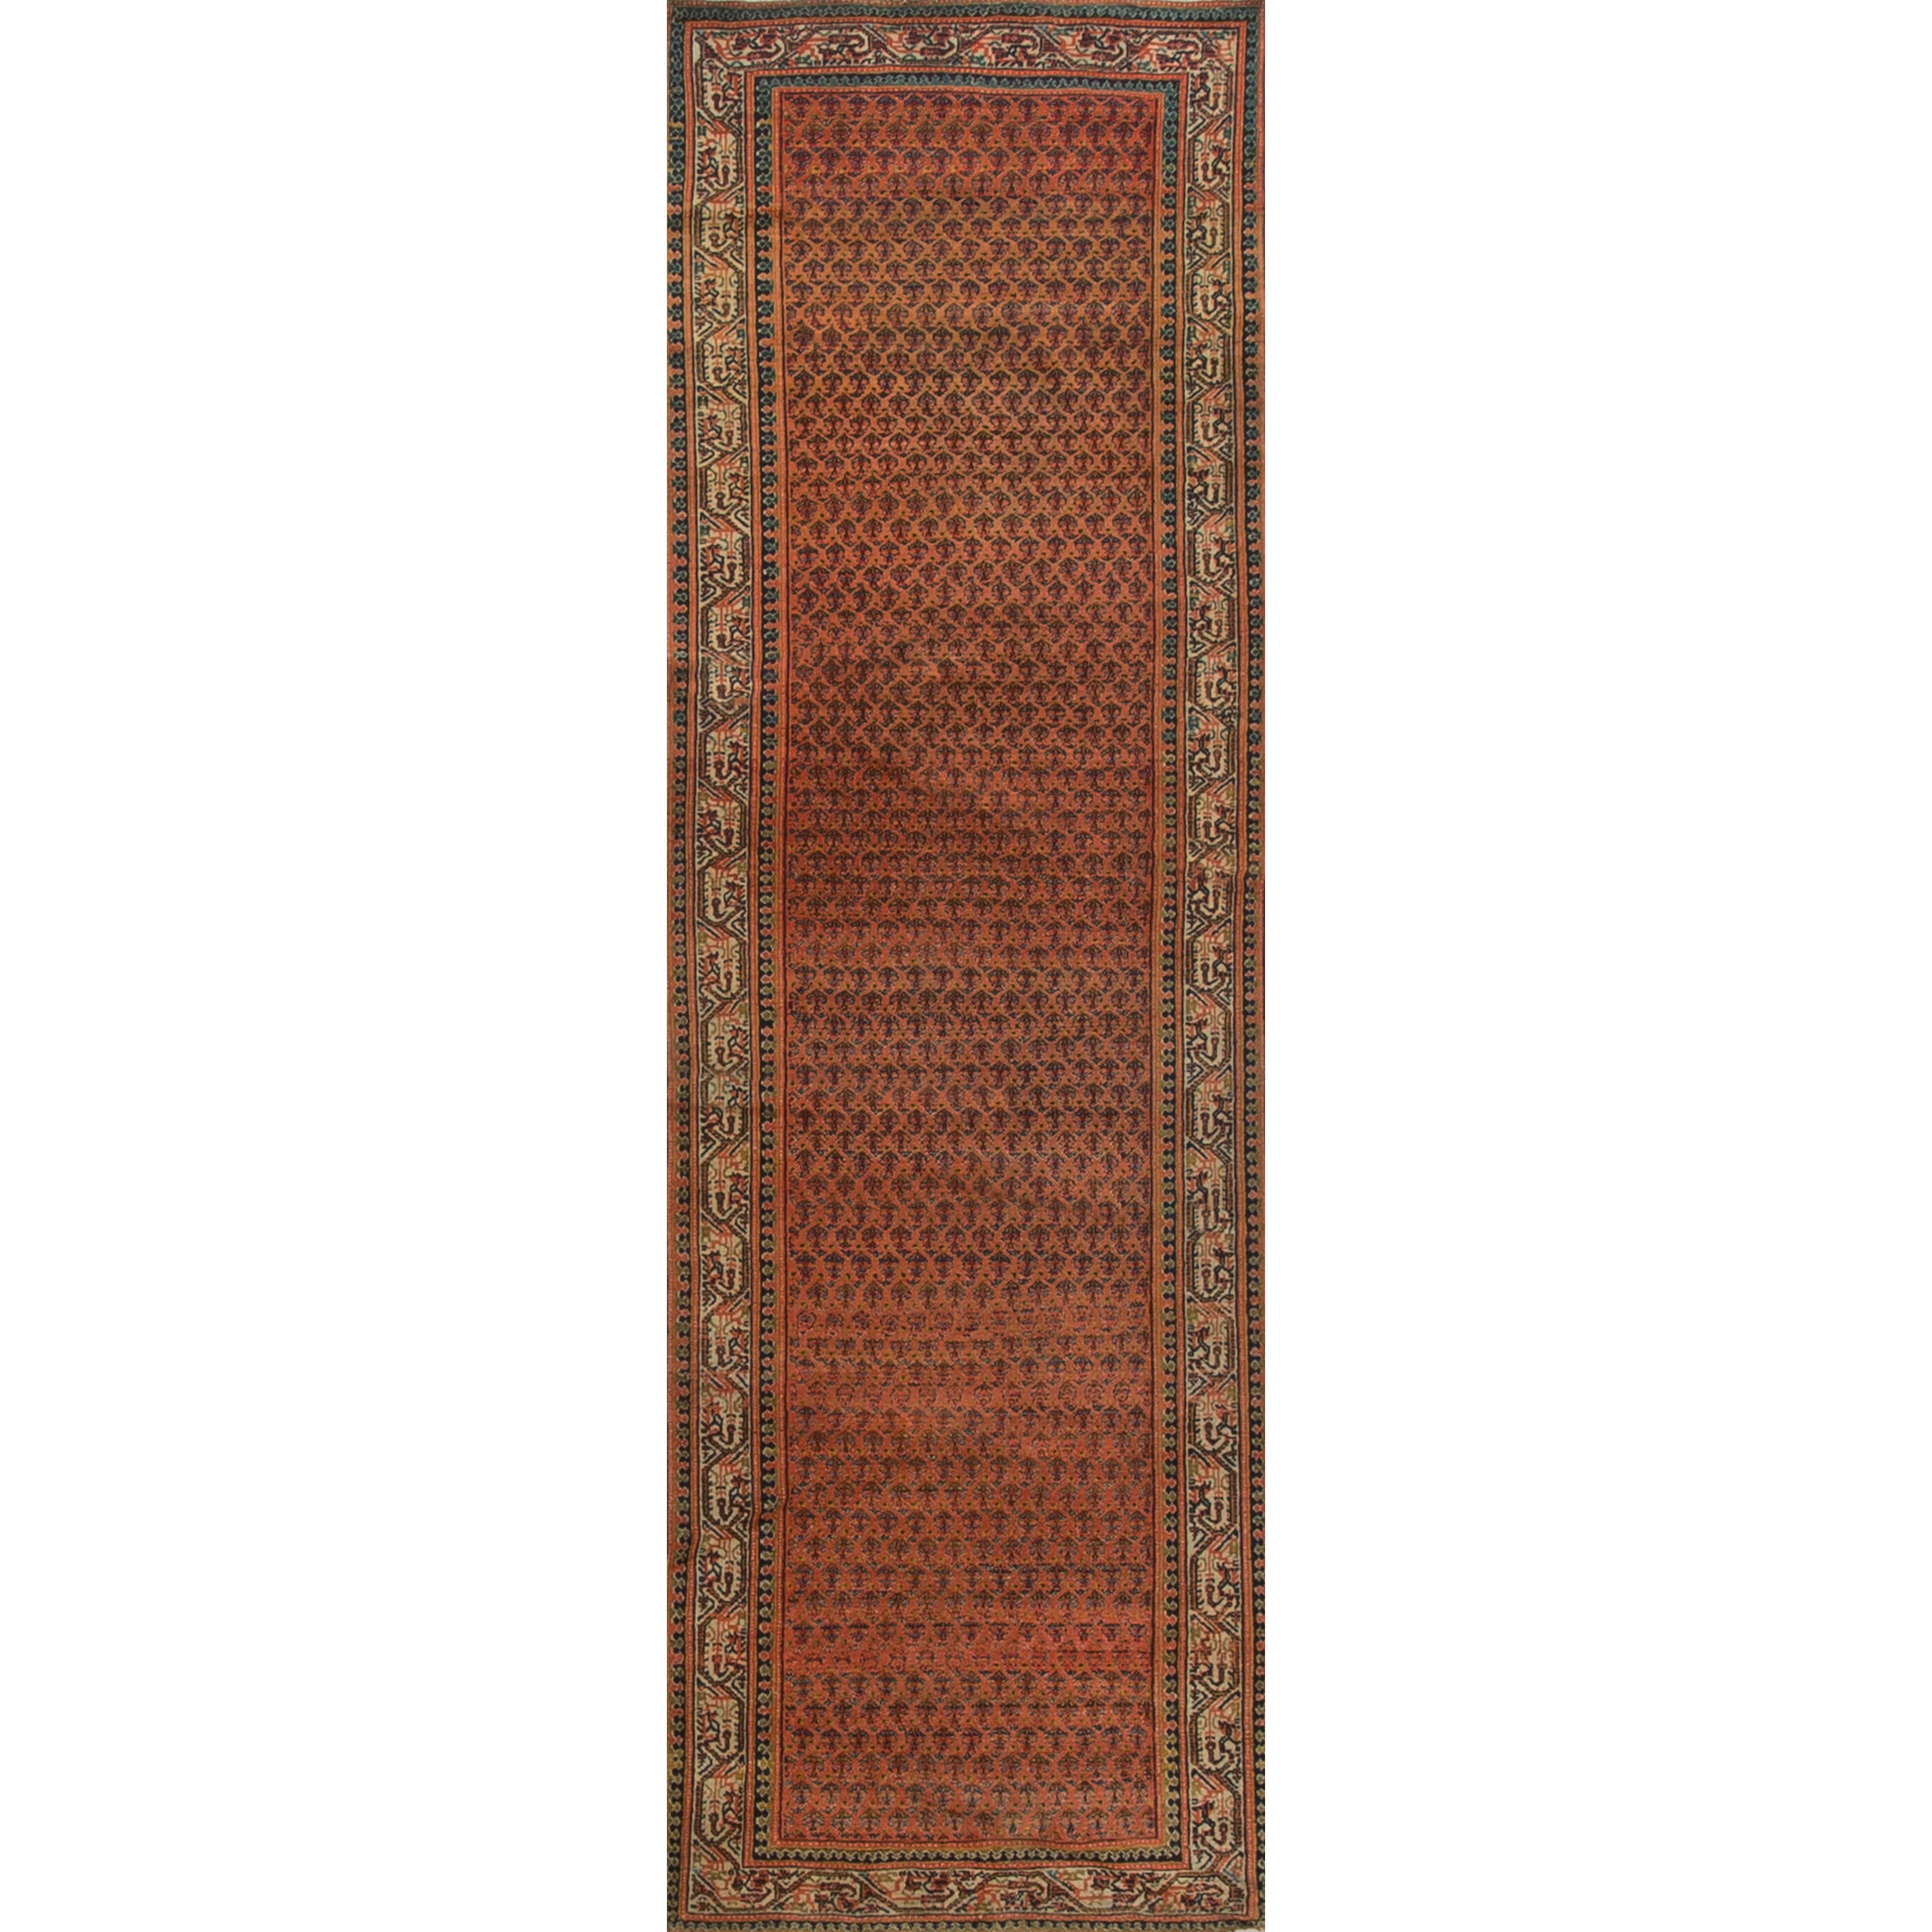 Seraband persan vintage, tapis de couloir, vers 1920  3'6 x 10'4